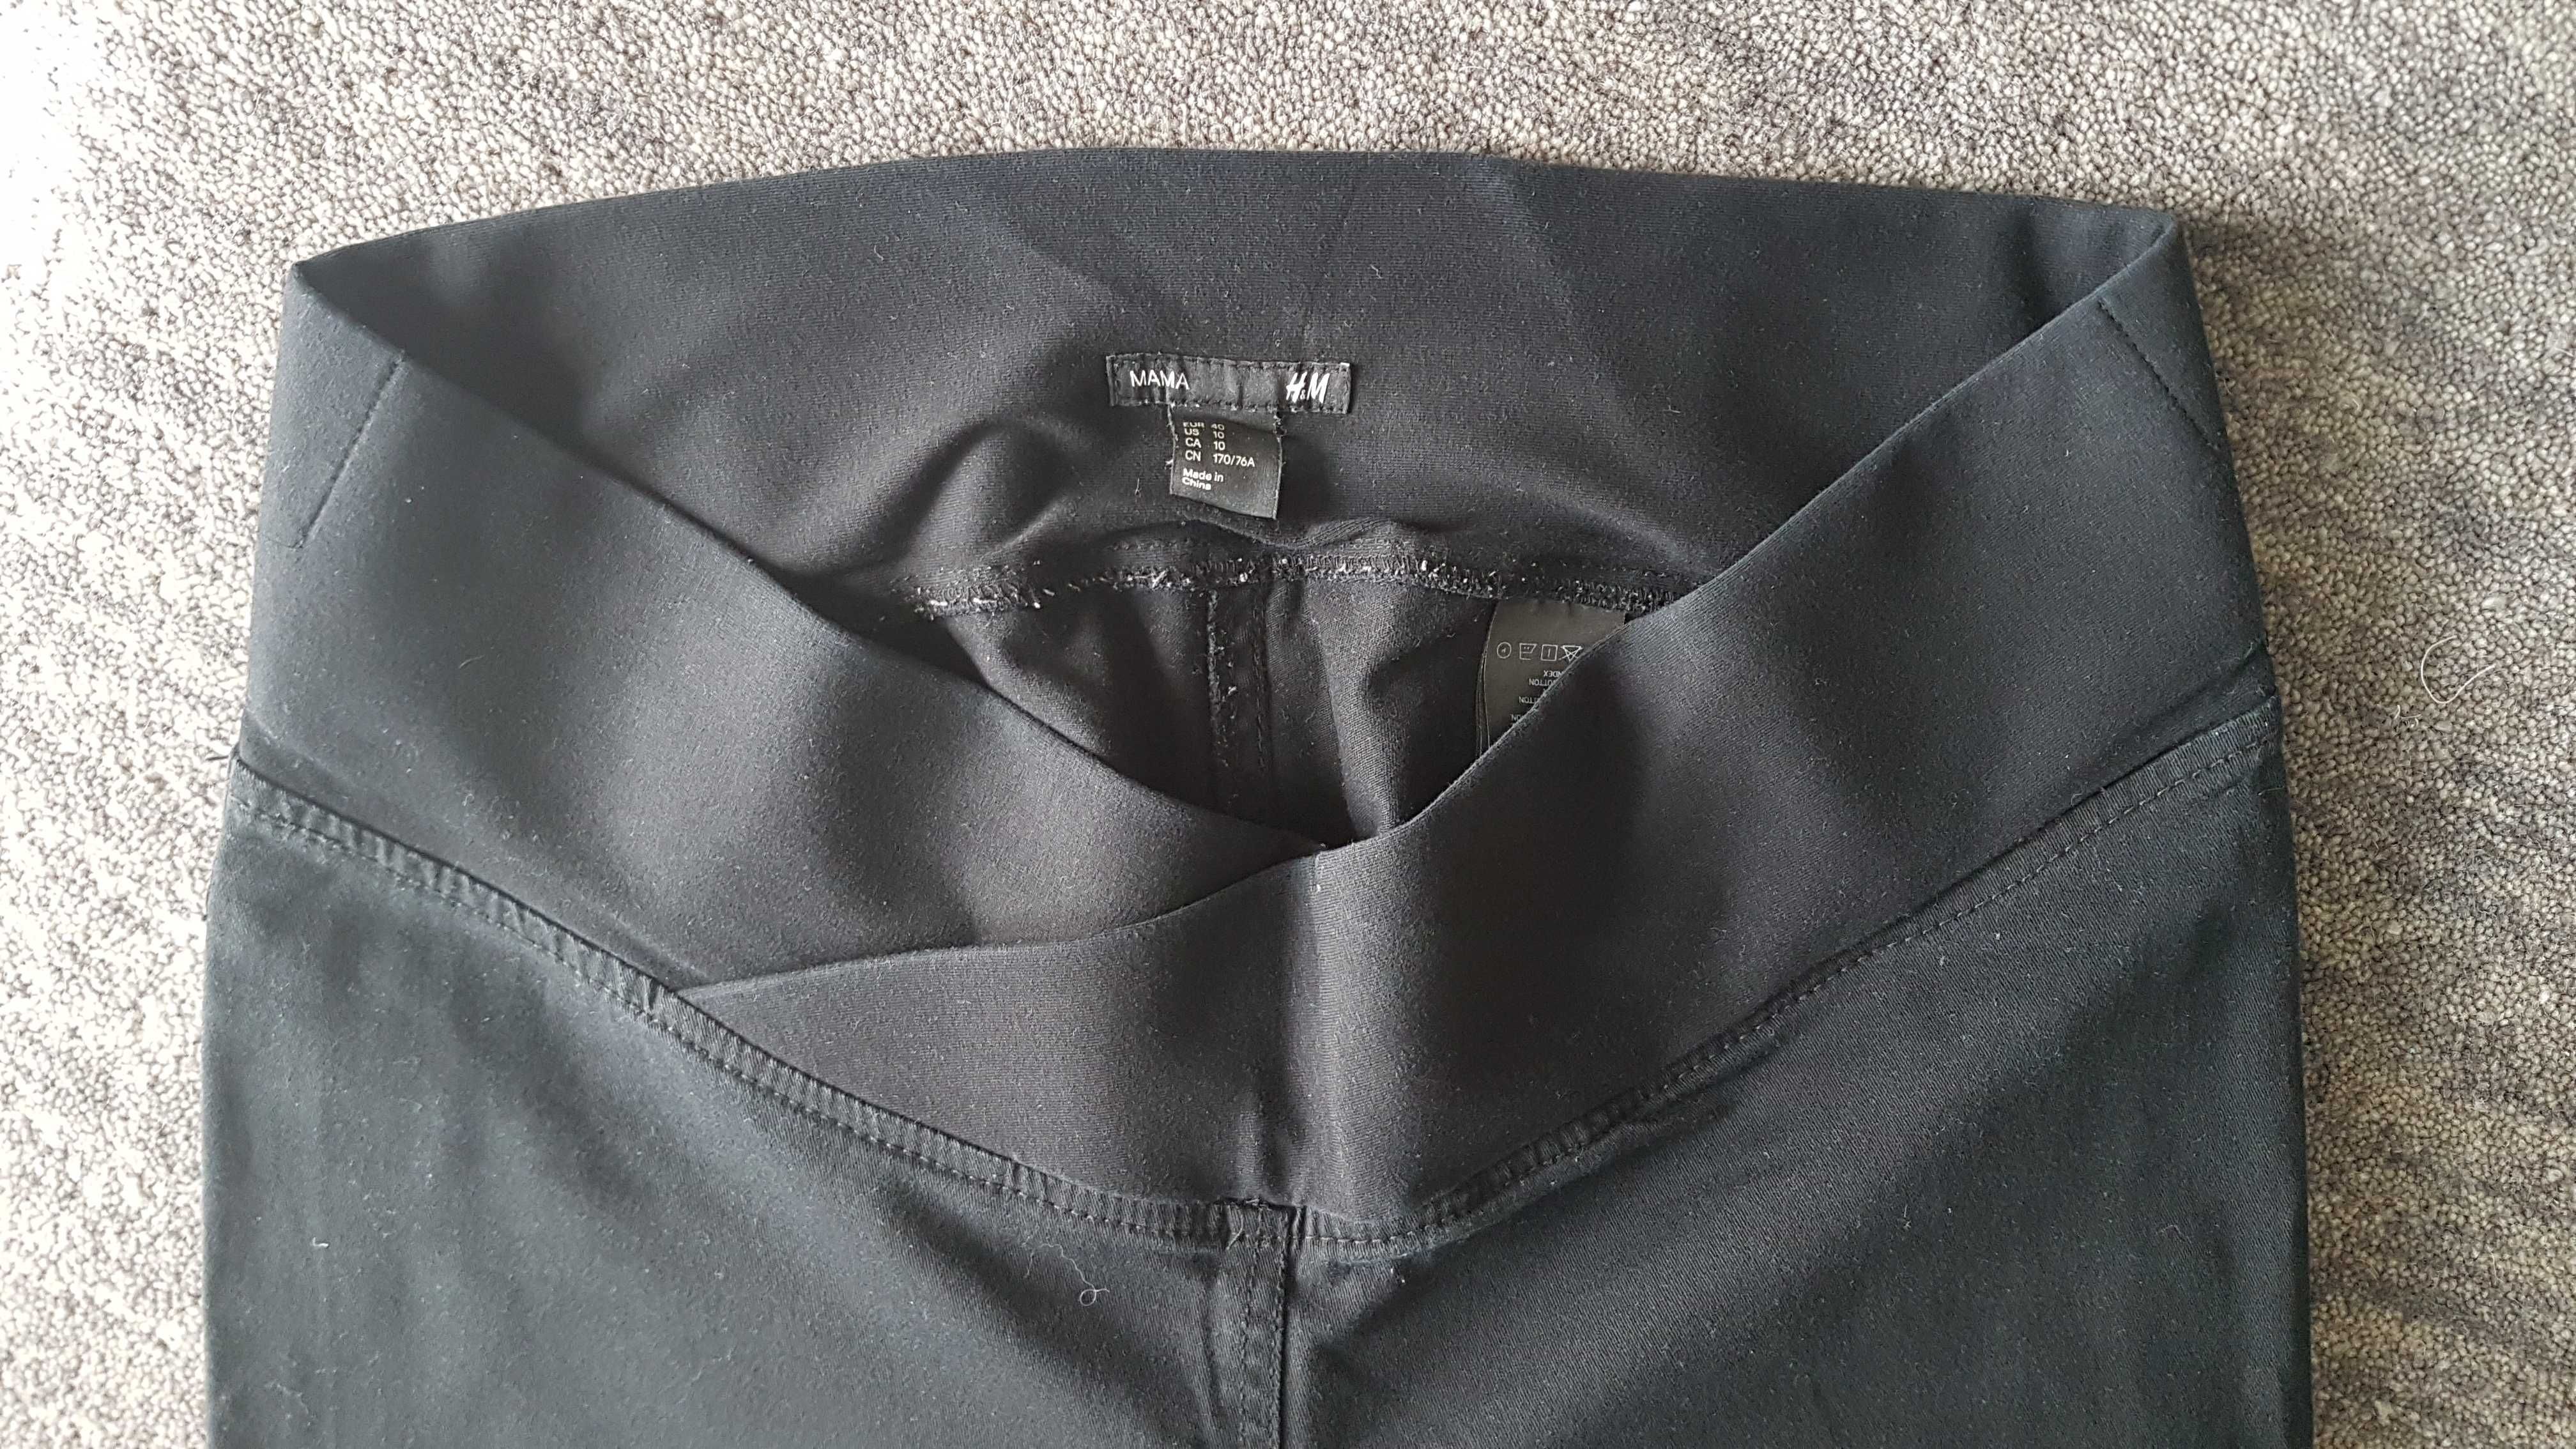 Spodnie ciazowe H&M rozmiar 40  czarne